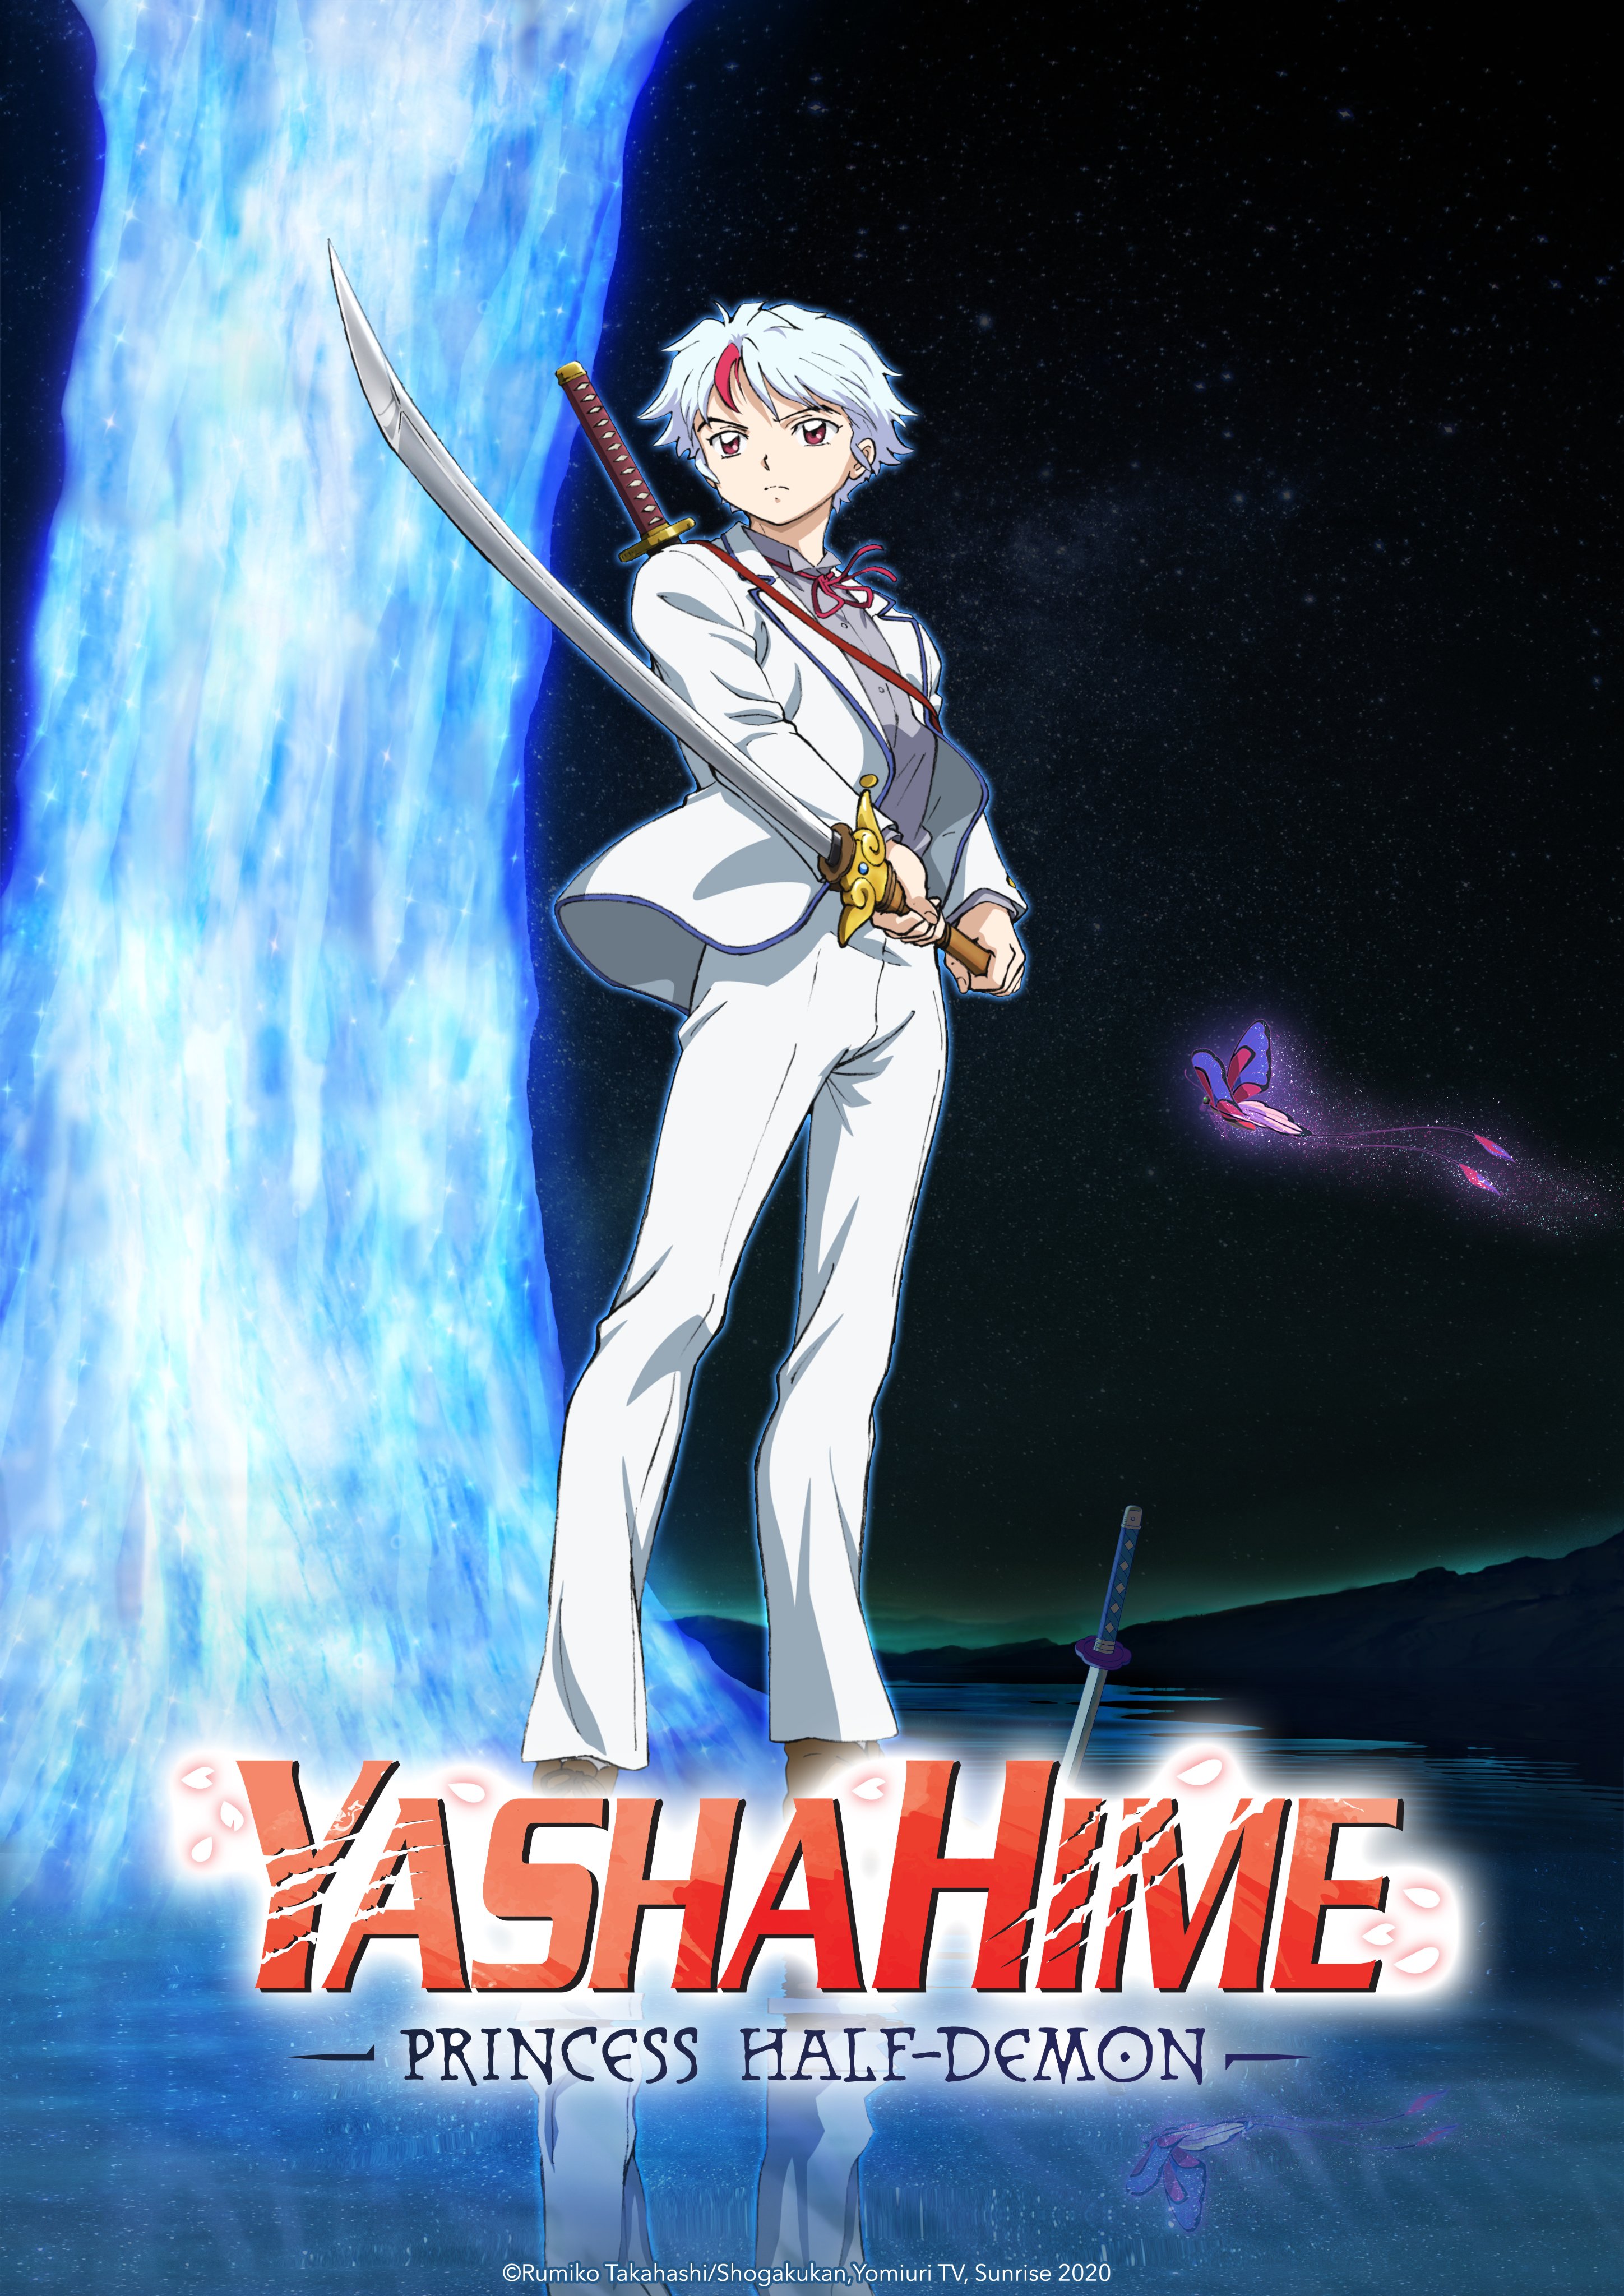 Yashahime: Princess Half-Demon